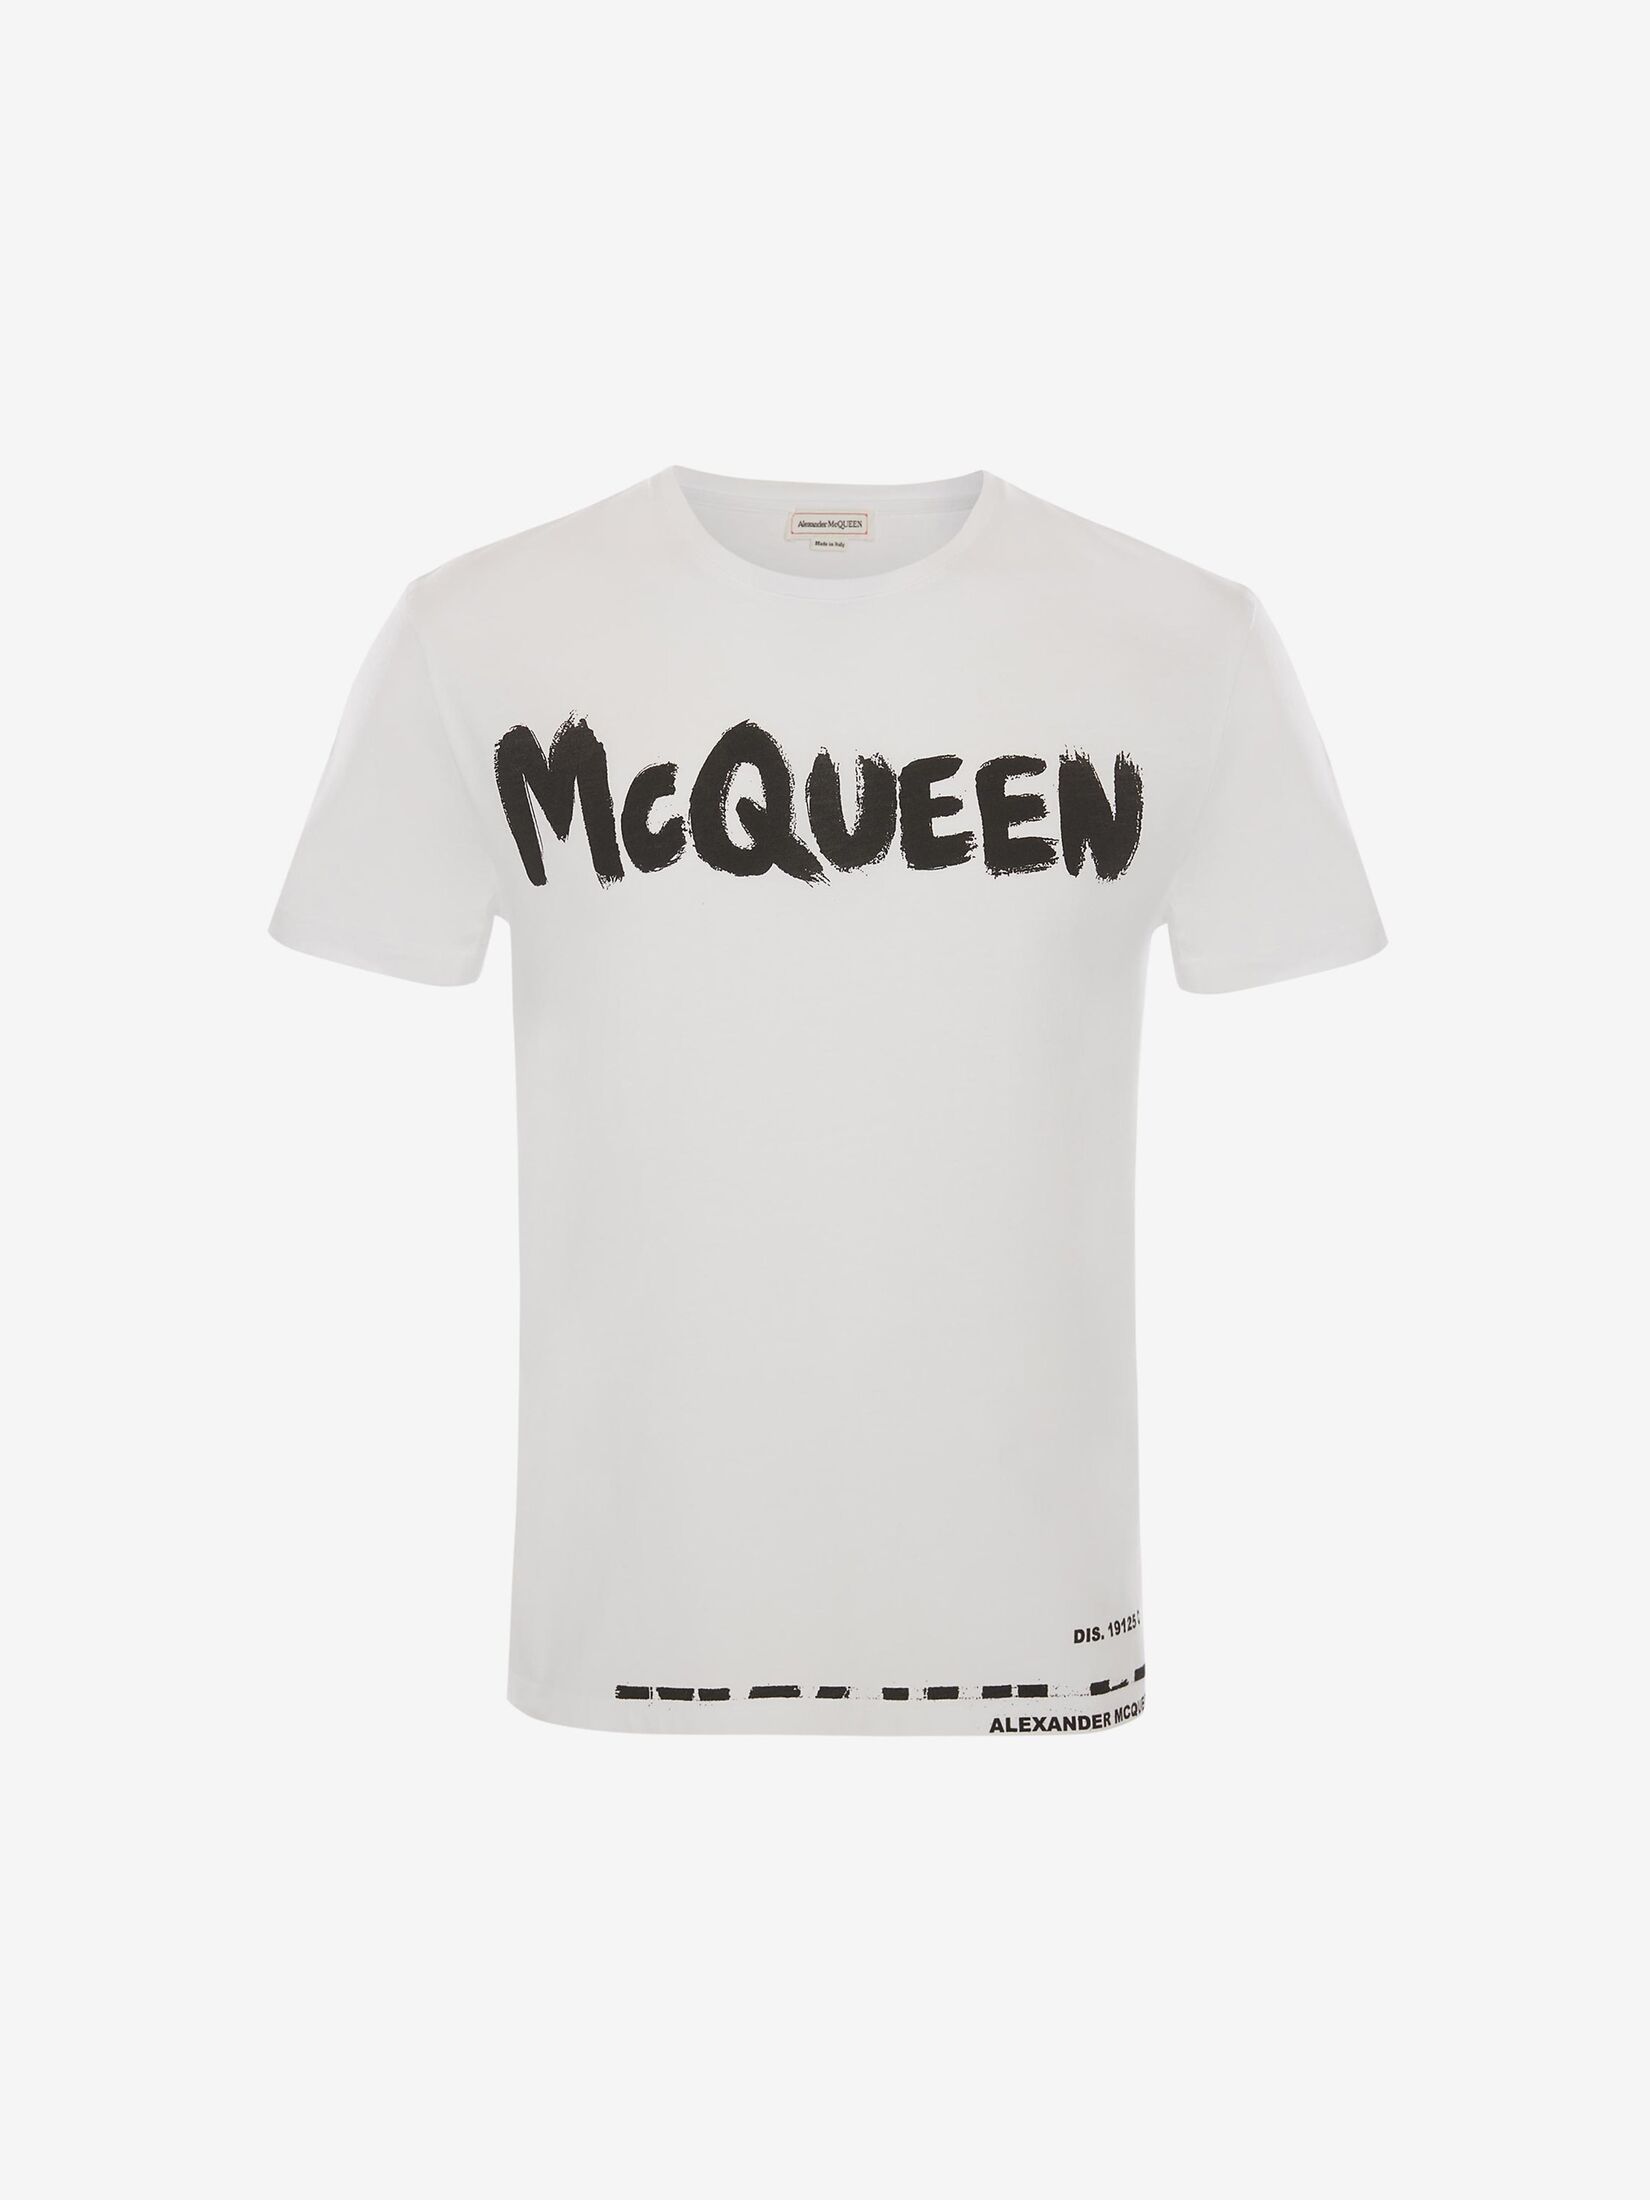 McQueen Graffiti T 恤